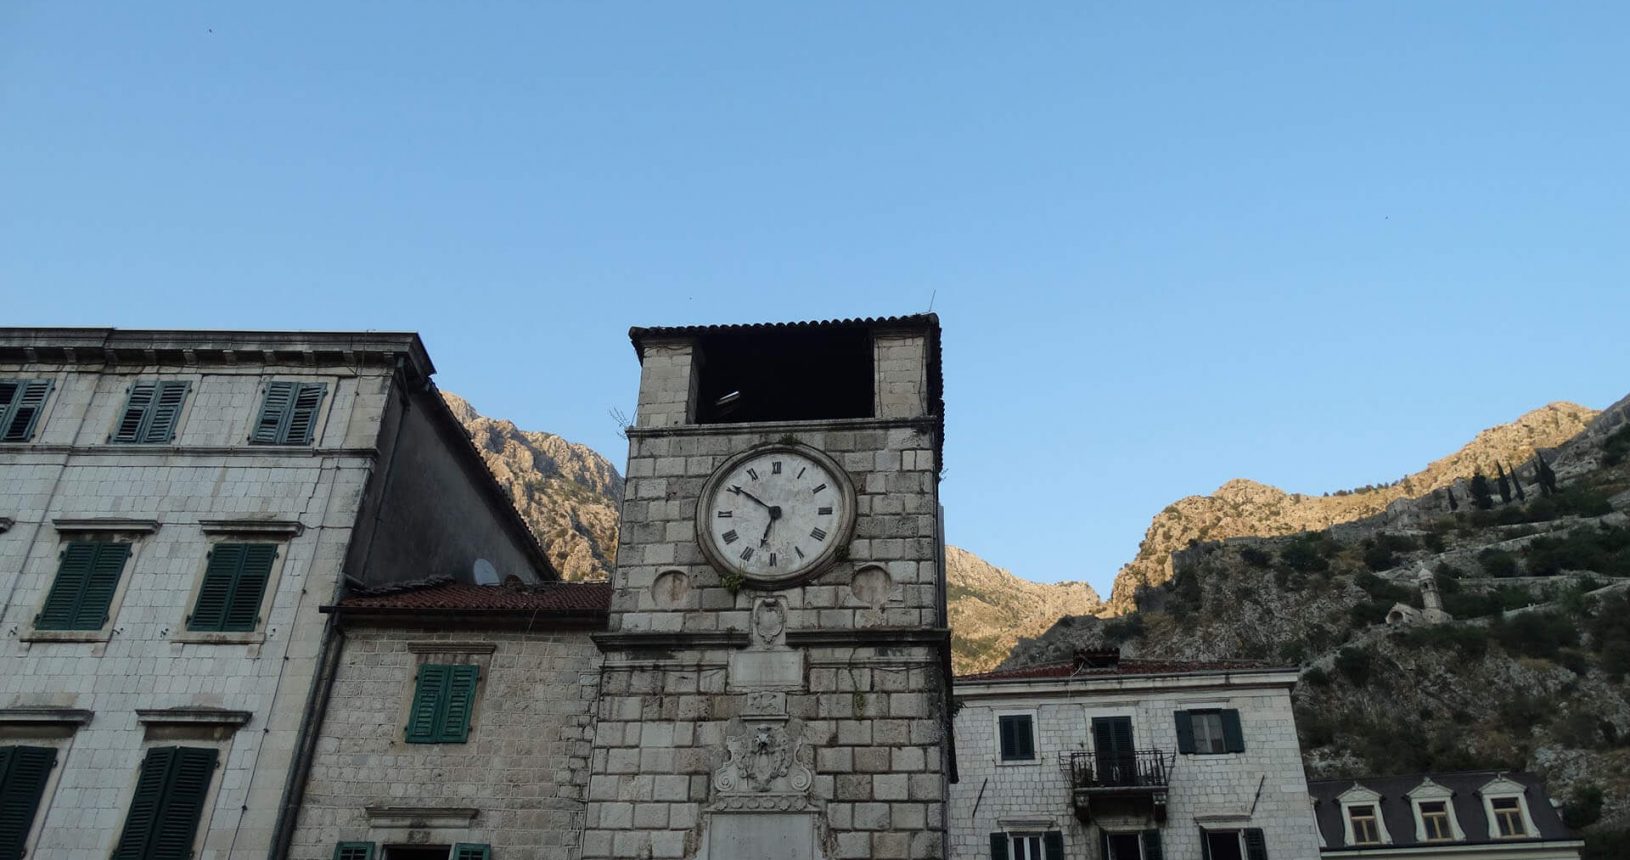 Inside Old Town of Kotor